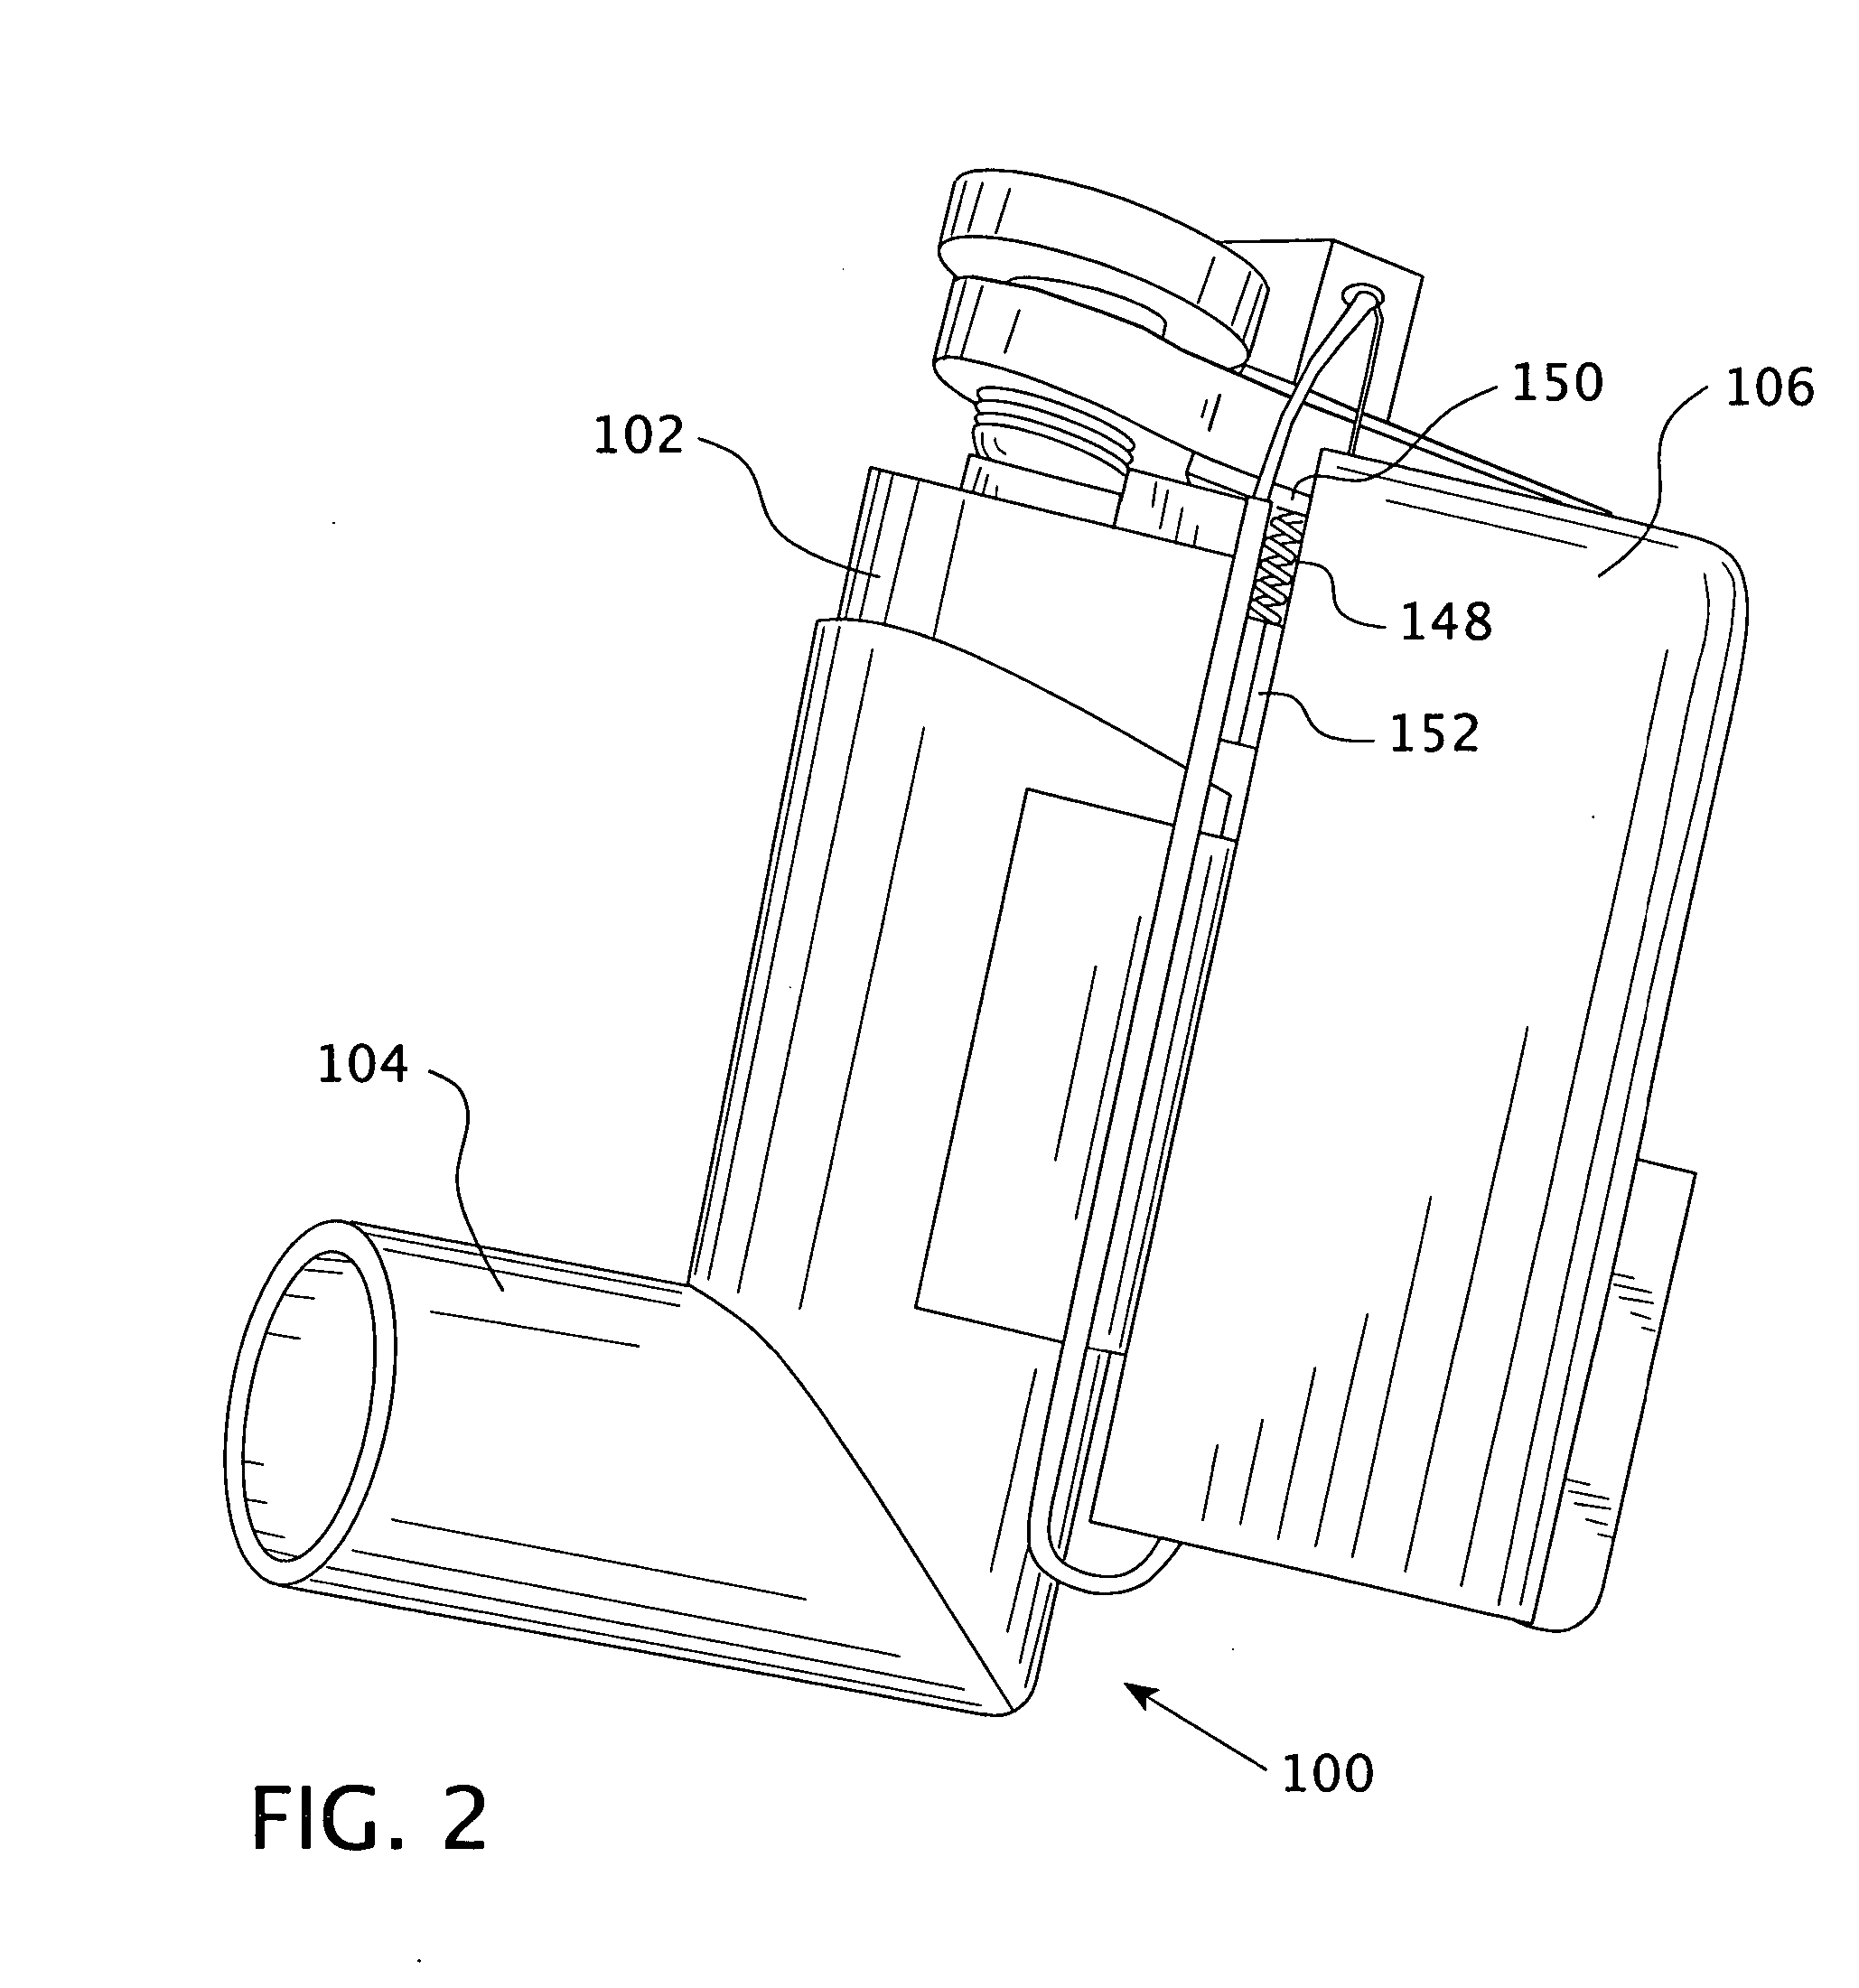 Actuator for a metered dose inhaler